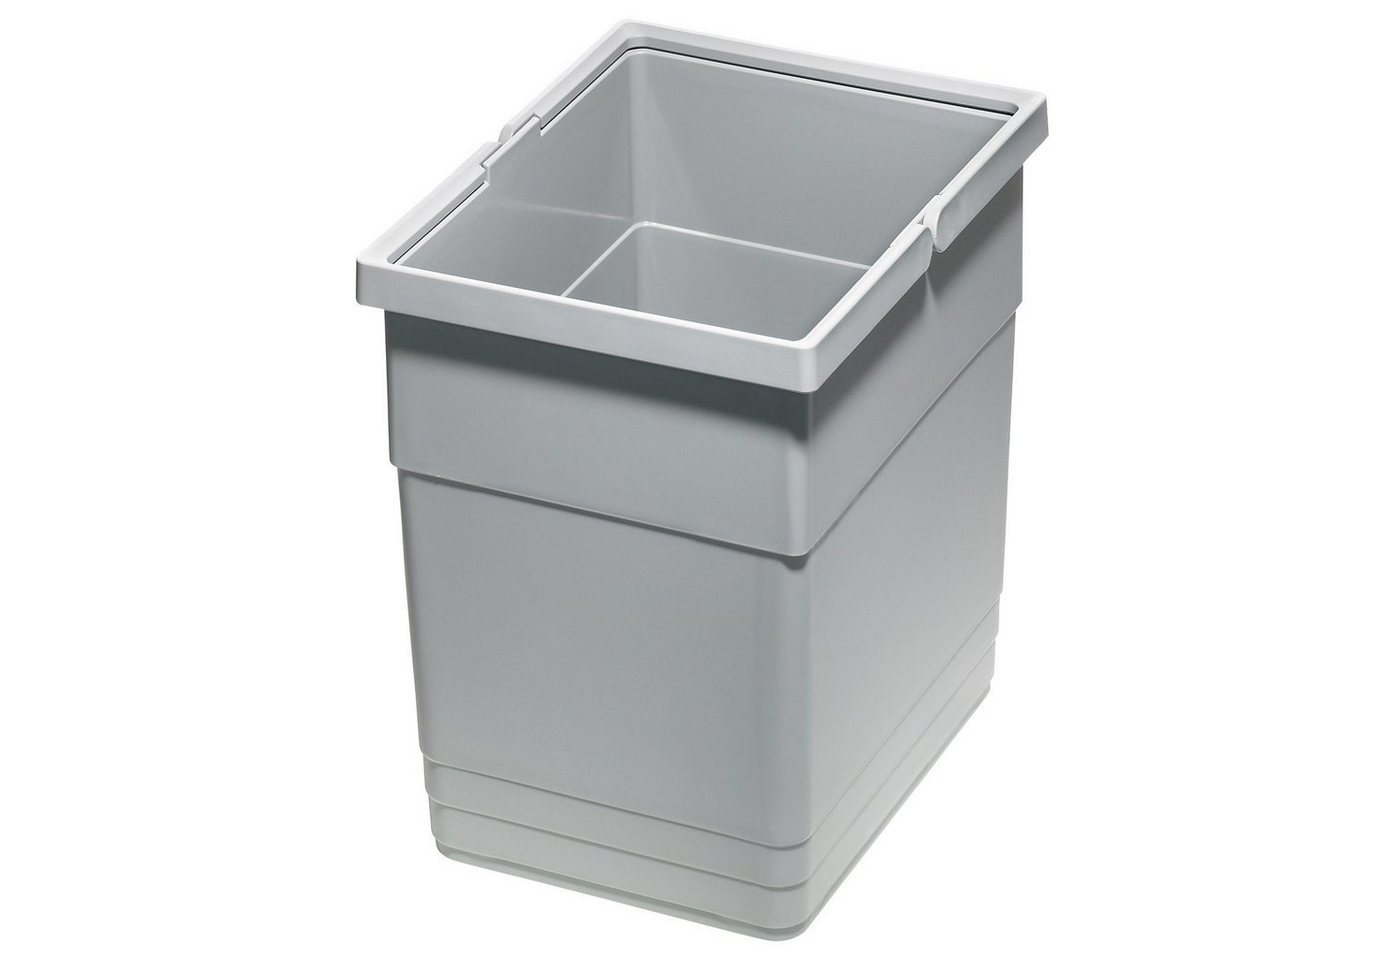 SO-TECH® Mülltrennsystem Abfallsammler Abfalleimer 5136.11 für Abfalltrennsystem eins2vier von SO-TECH®